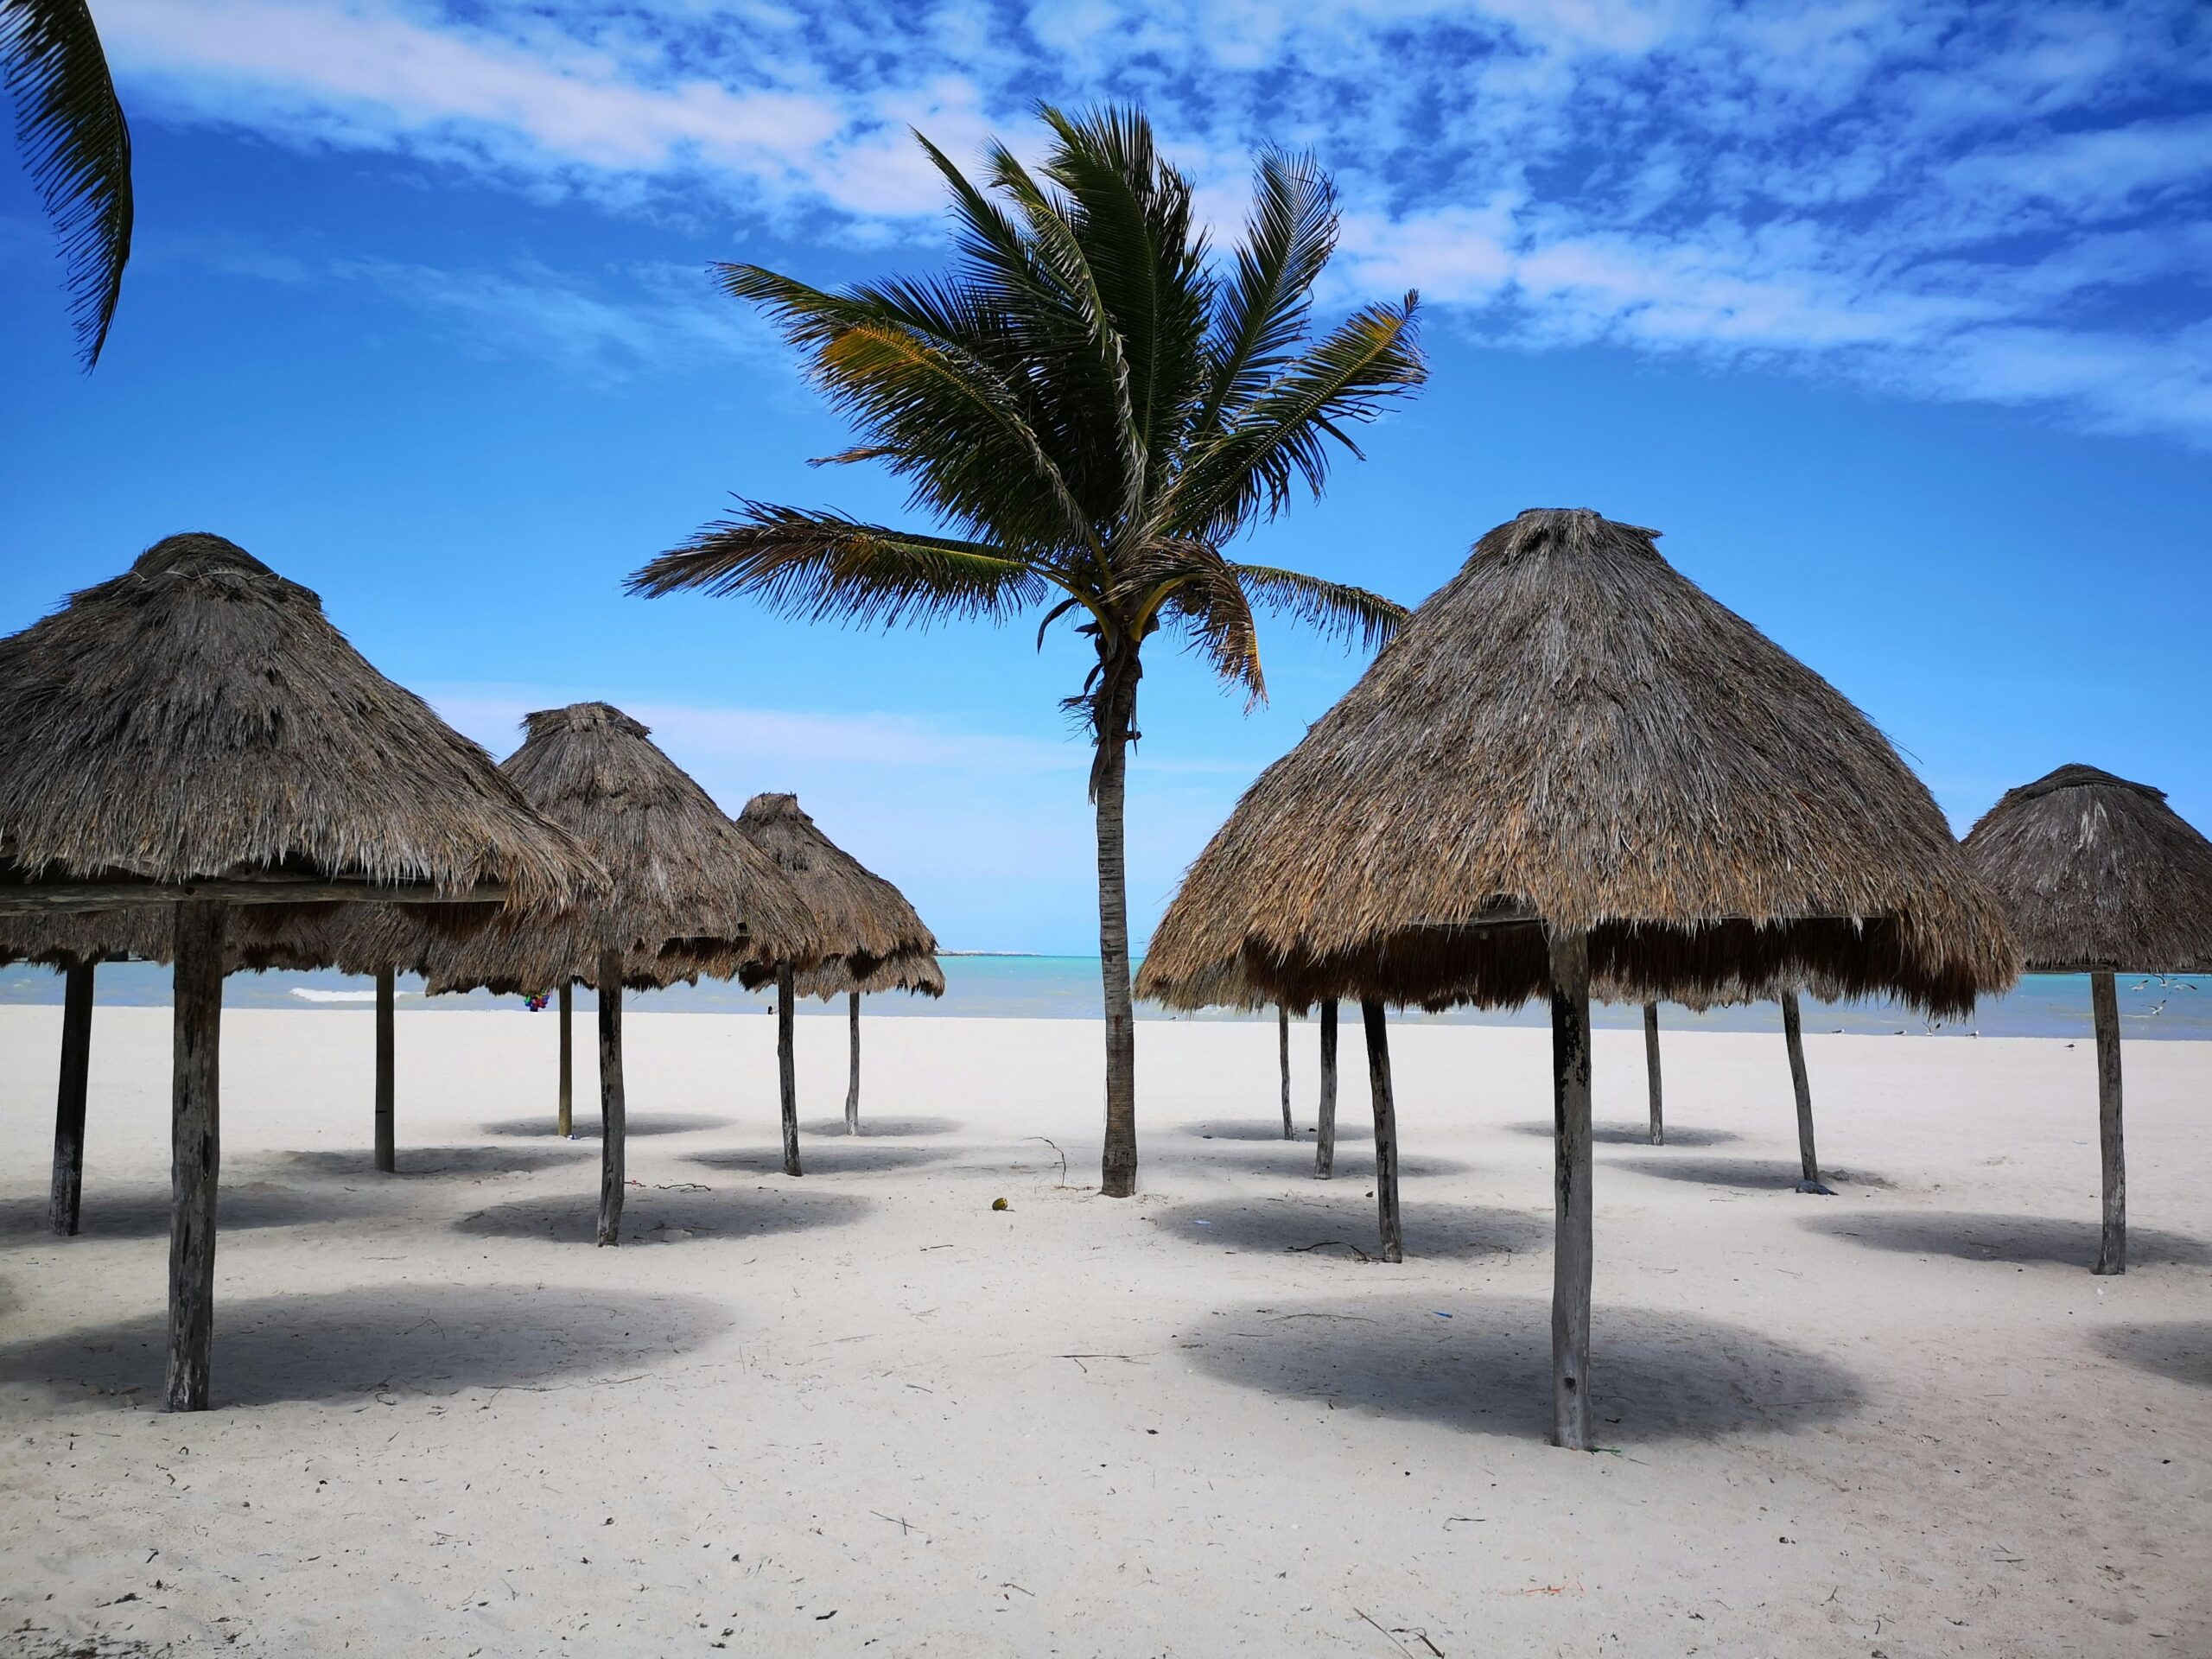 several tiki huts on a beach in Progreso Mexico surrounding a palm tree.